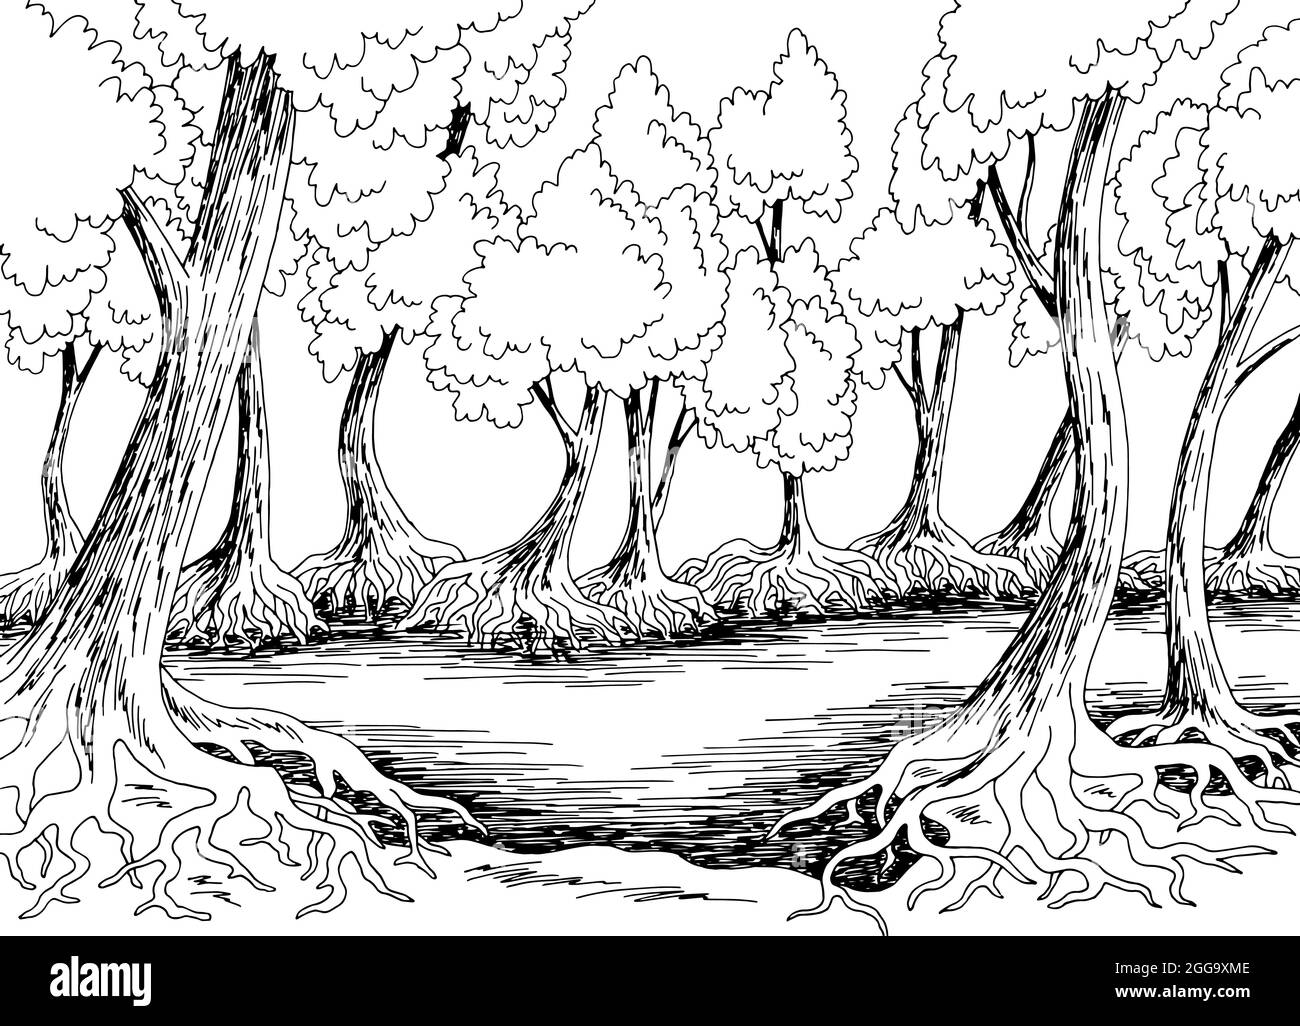 Mangroven Dschungel Wald Fluss Grafik schwarz weiß Landschaft Skizze Illustration Vektor Stock Vektor